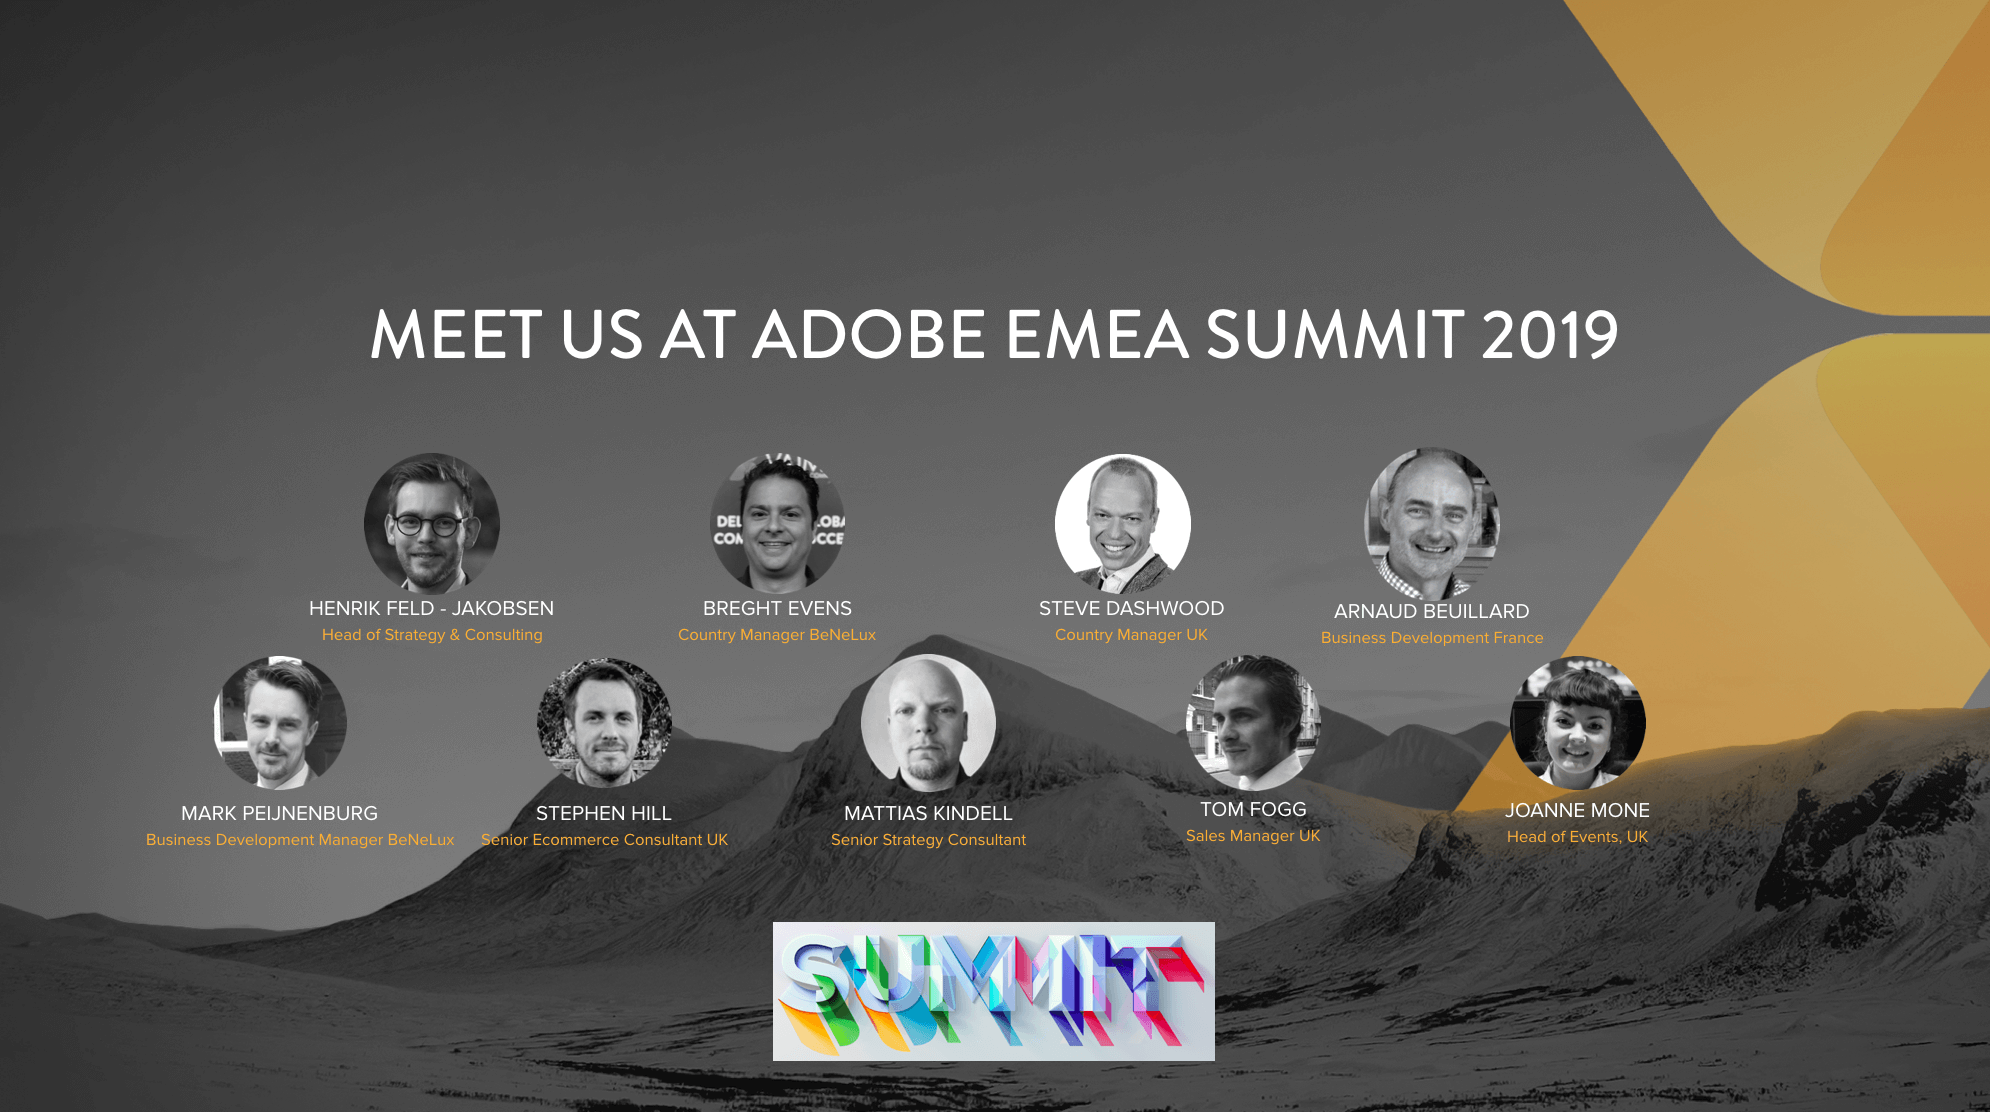 EMEA Summit 2019